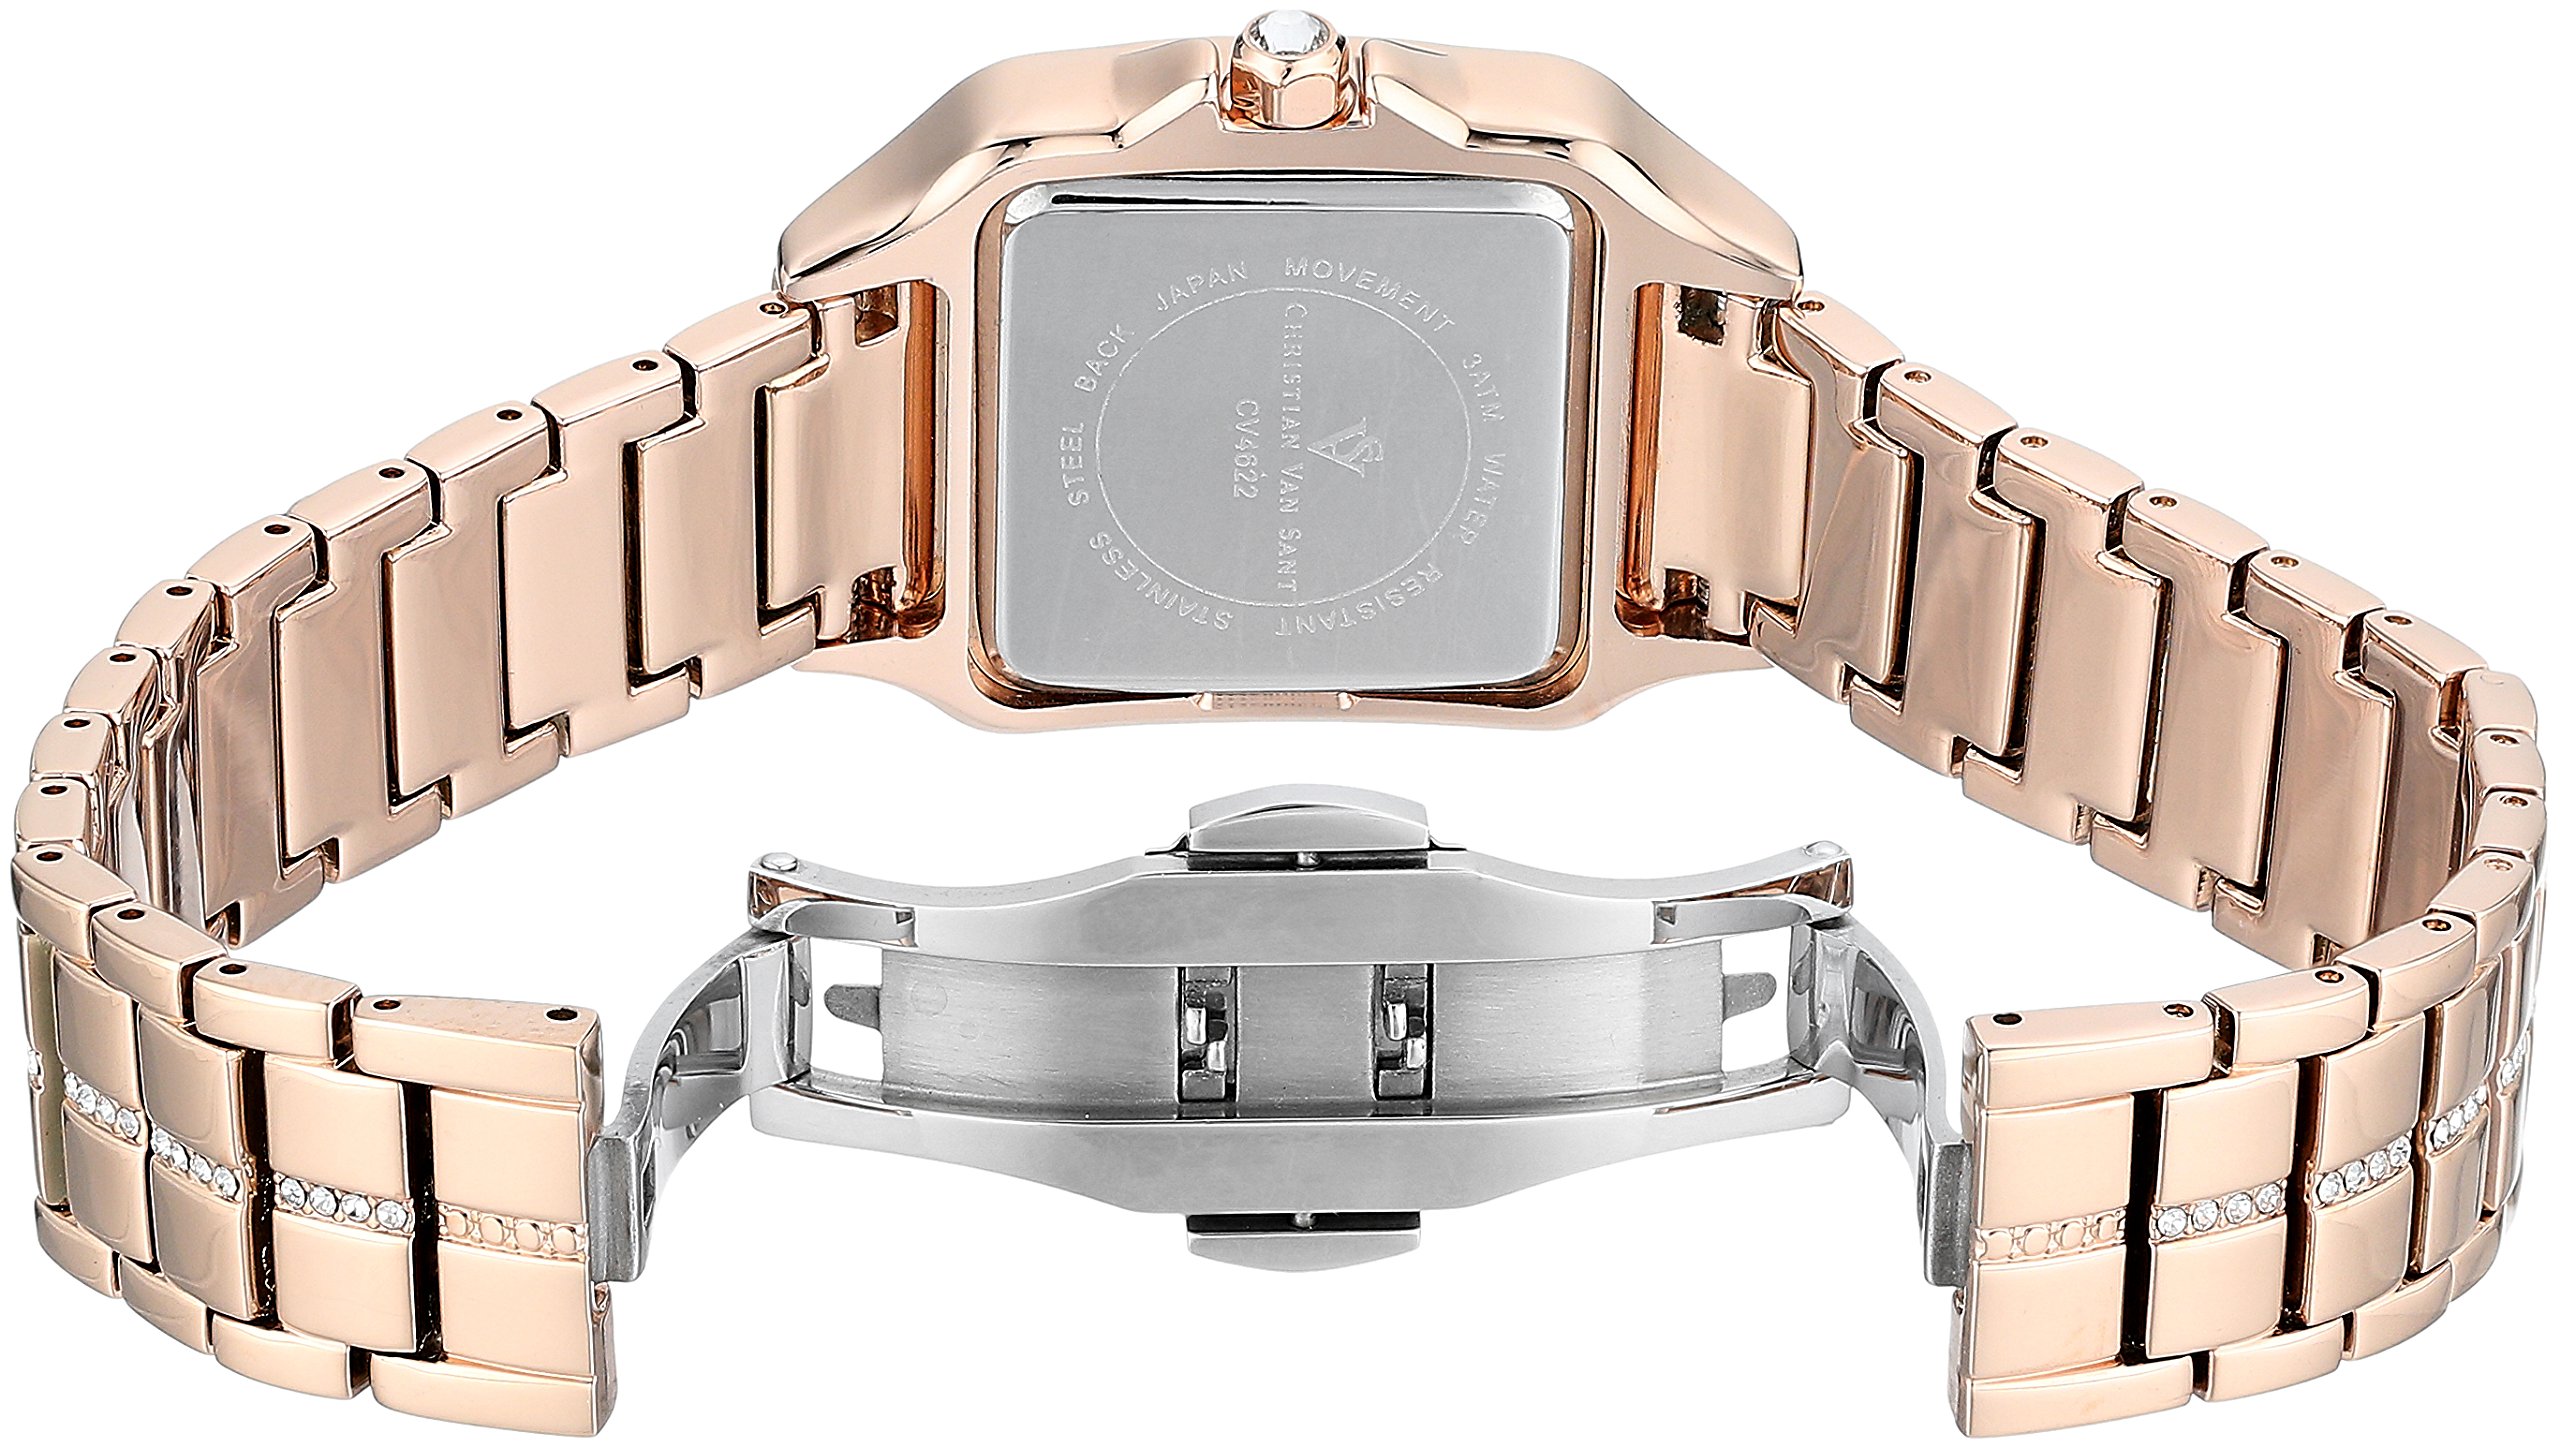 Christian Van Sant Women's CV4622 Splendeur Analog Display Quartz Rose Gold Watch